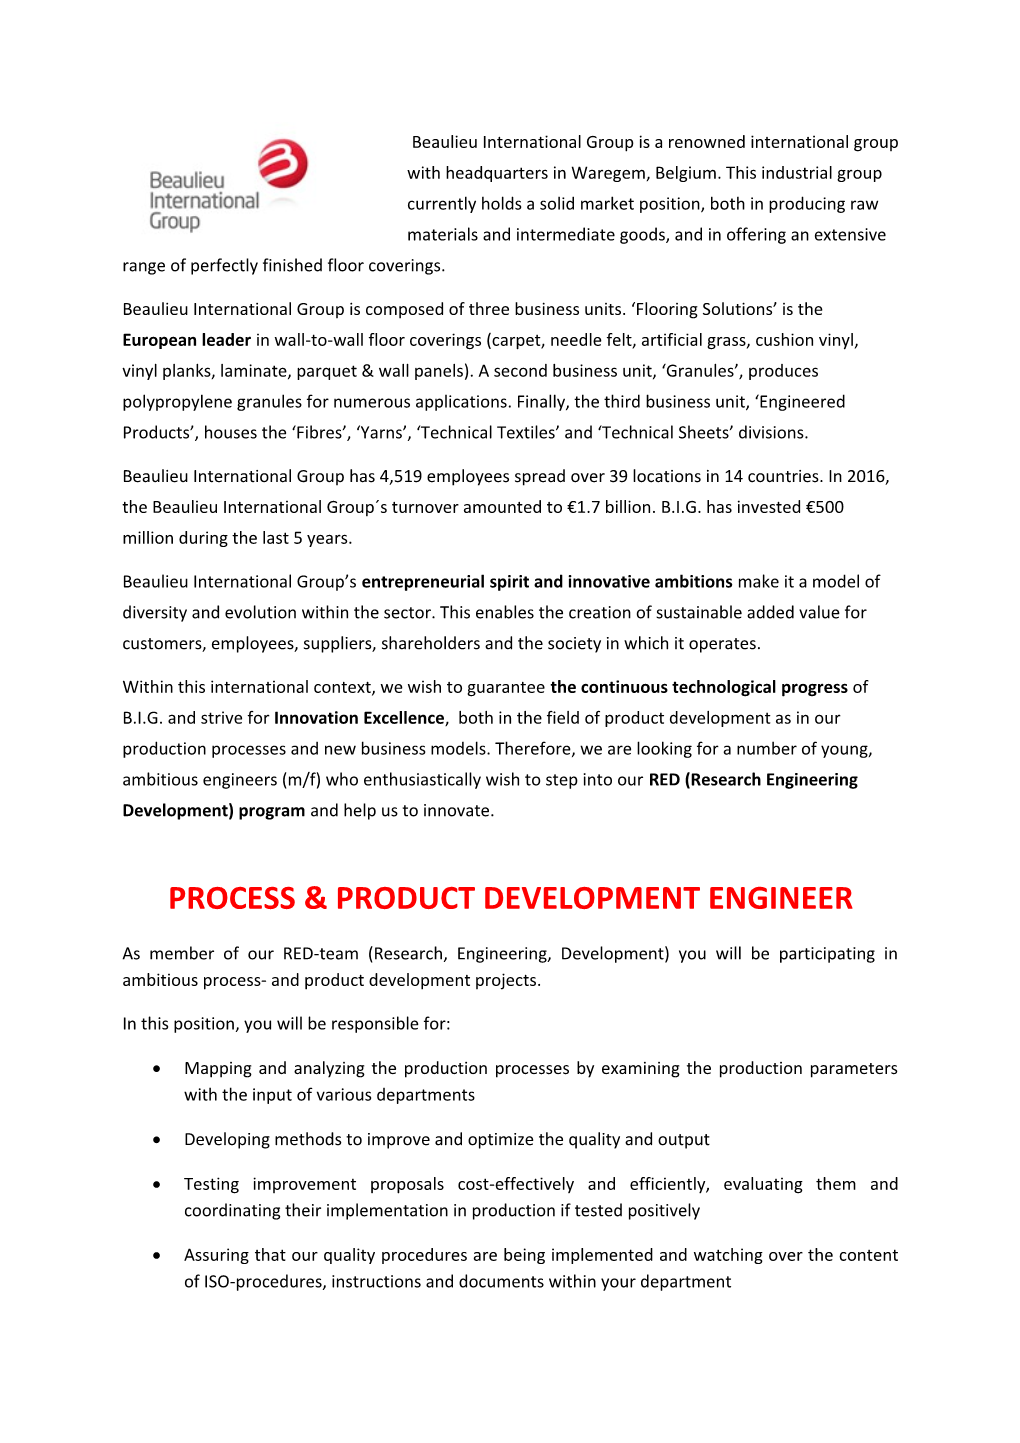 Process & Product Development Engineer